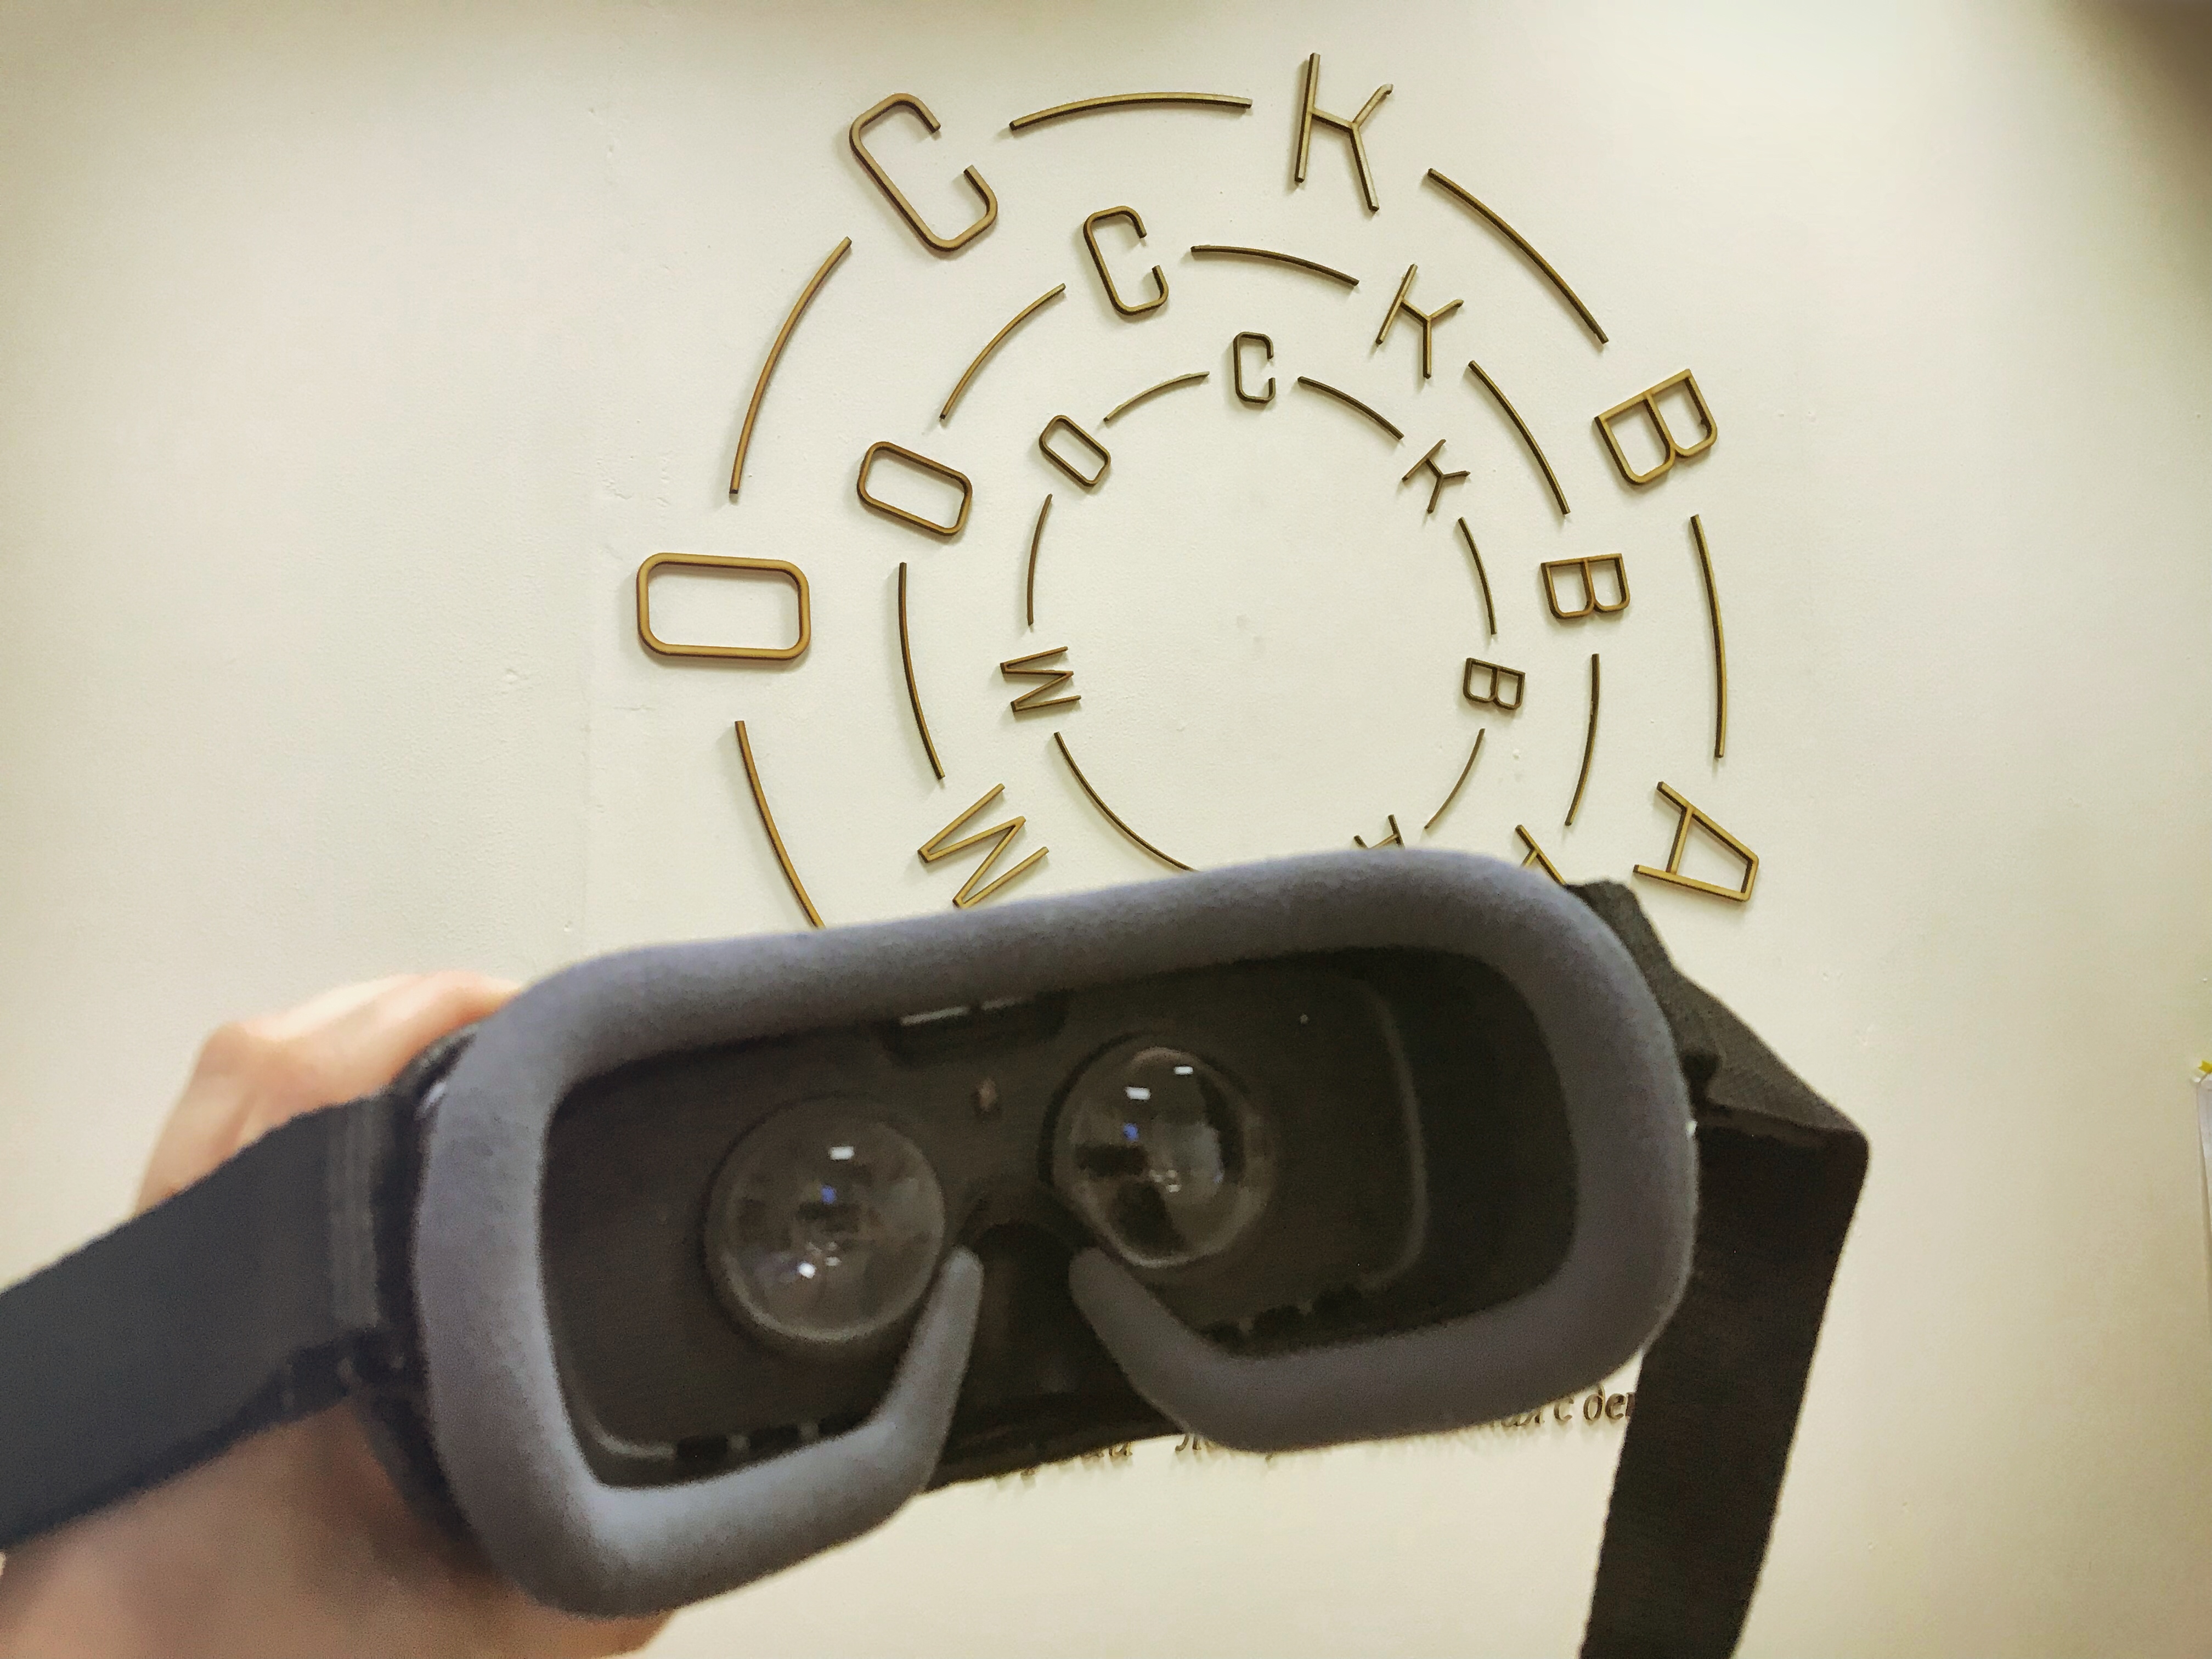 kscheib moskau virtual reality